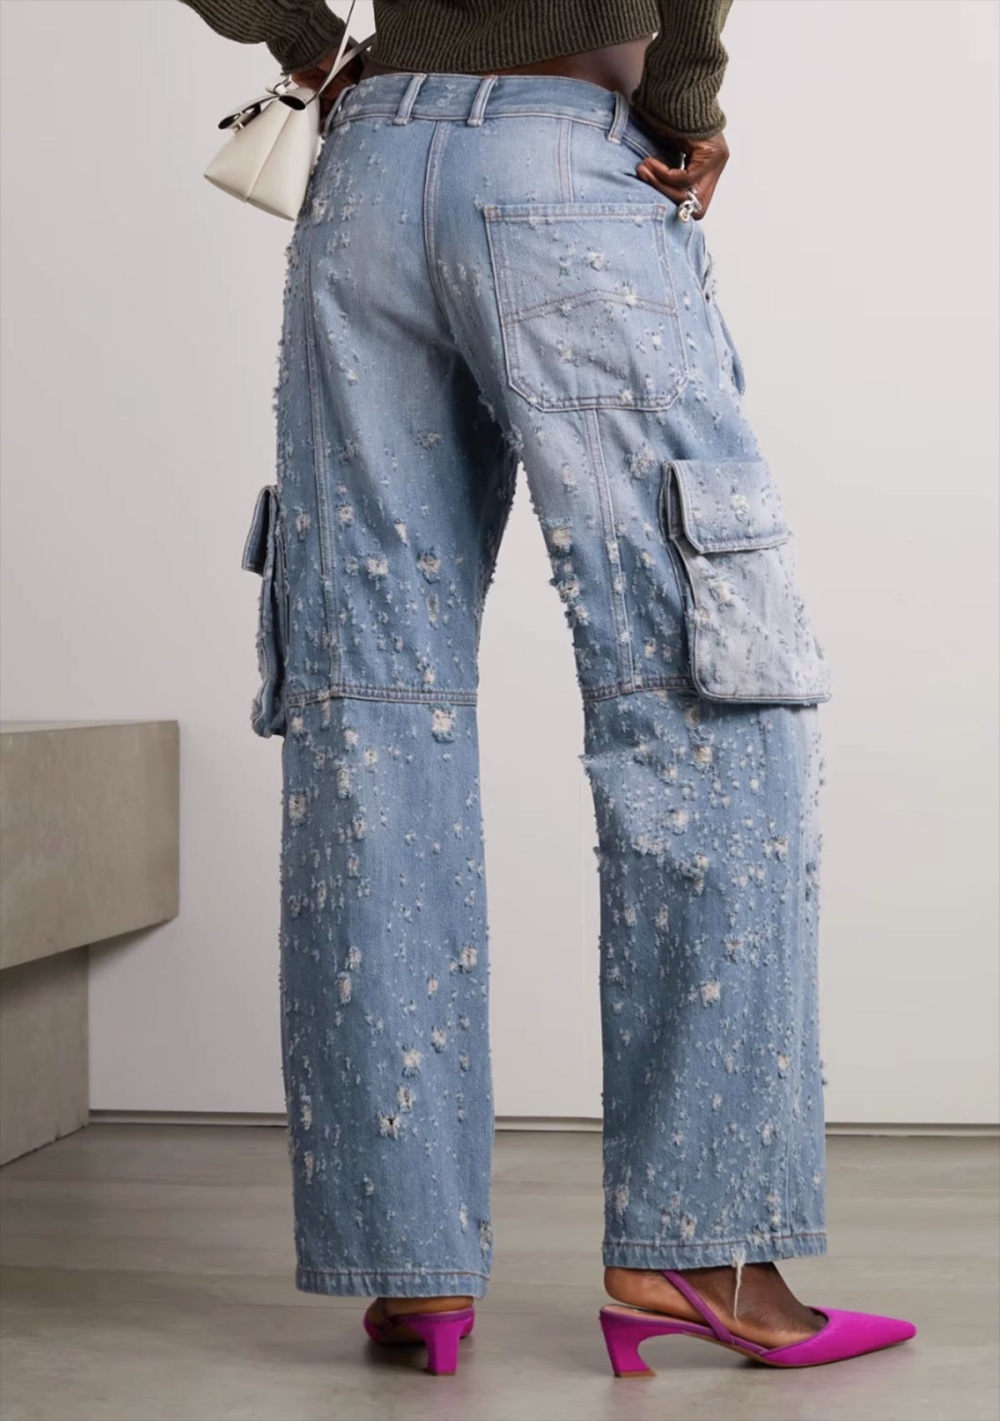 High waist niche jeans loose holes long pants for women